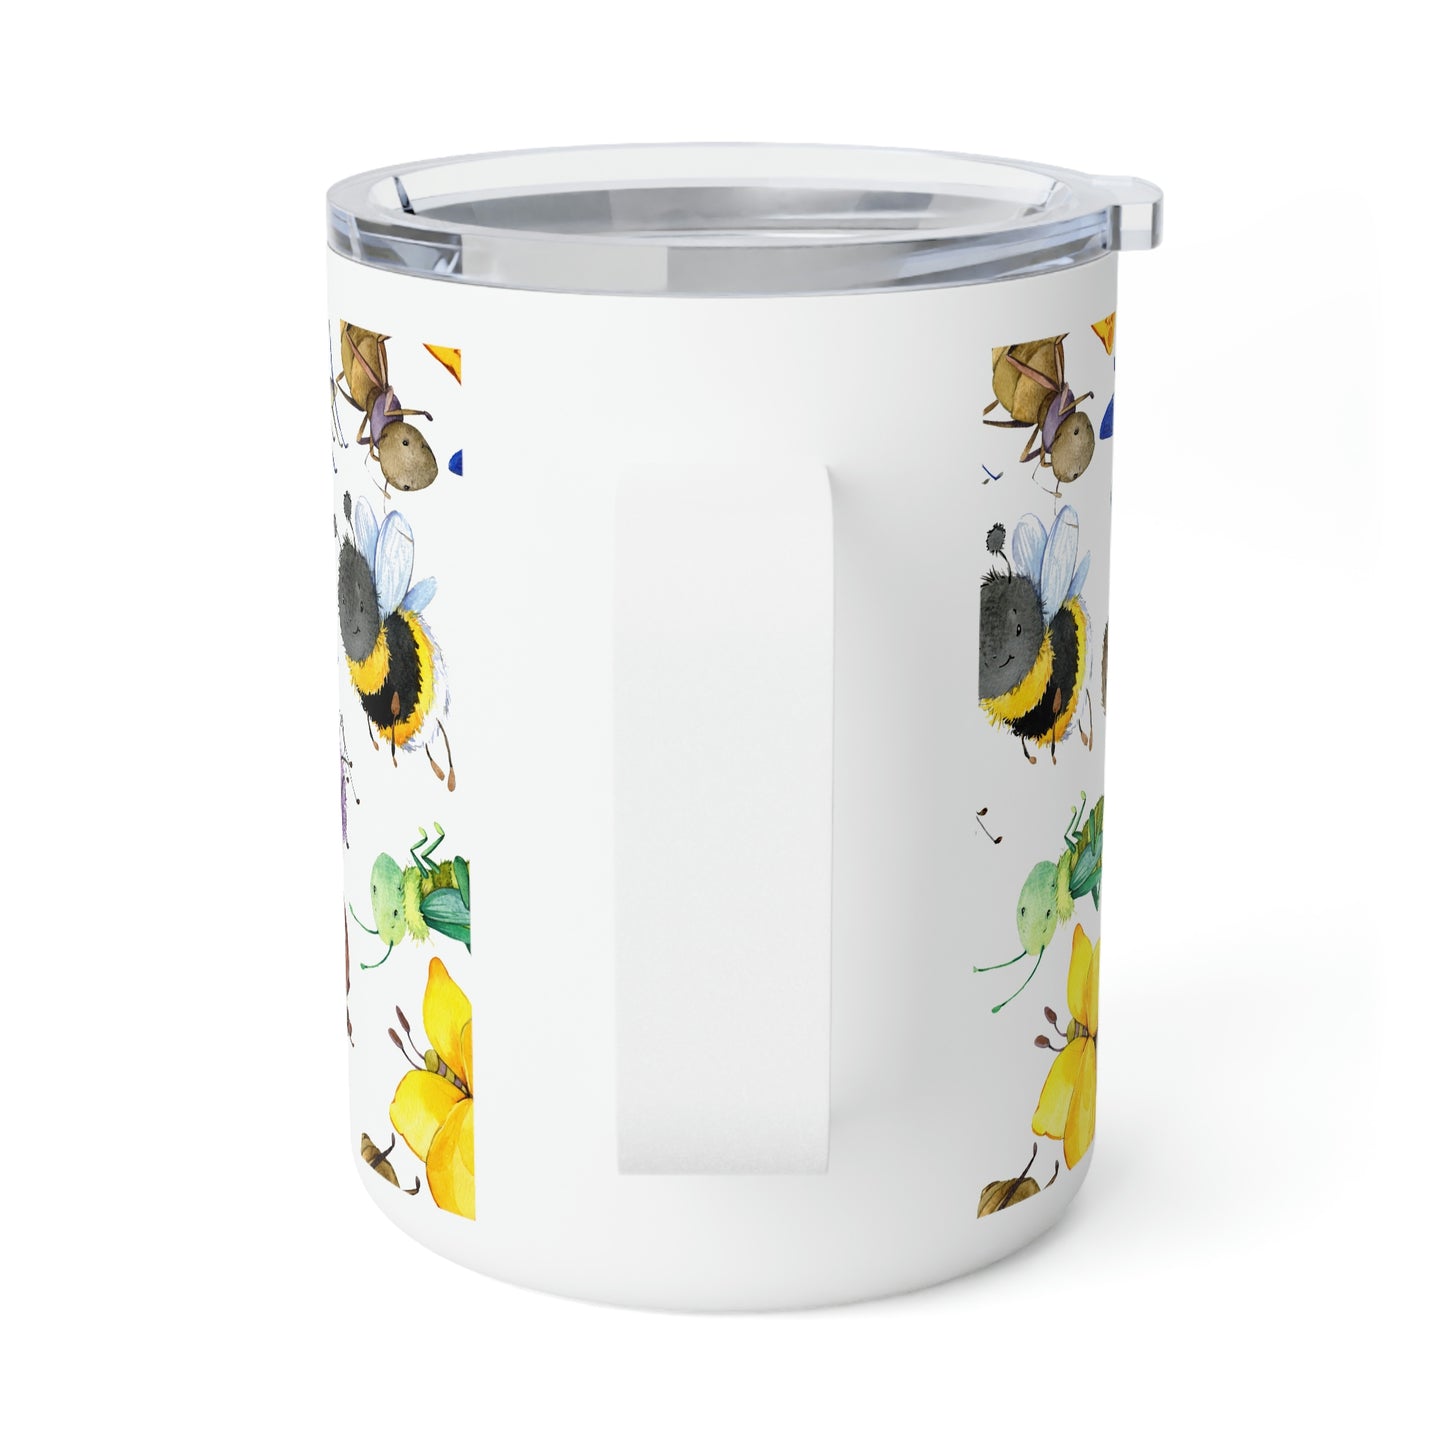 Ladybugs, Bees and Dragonflies Insulated Coffee Mug, 10oz